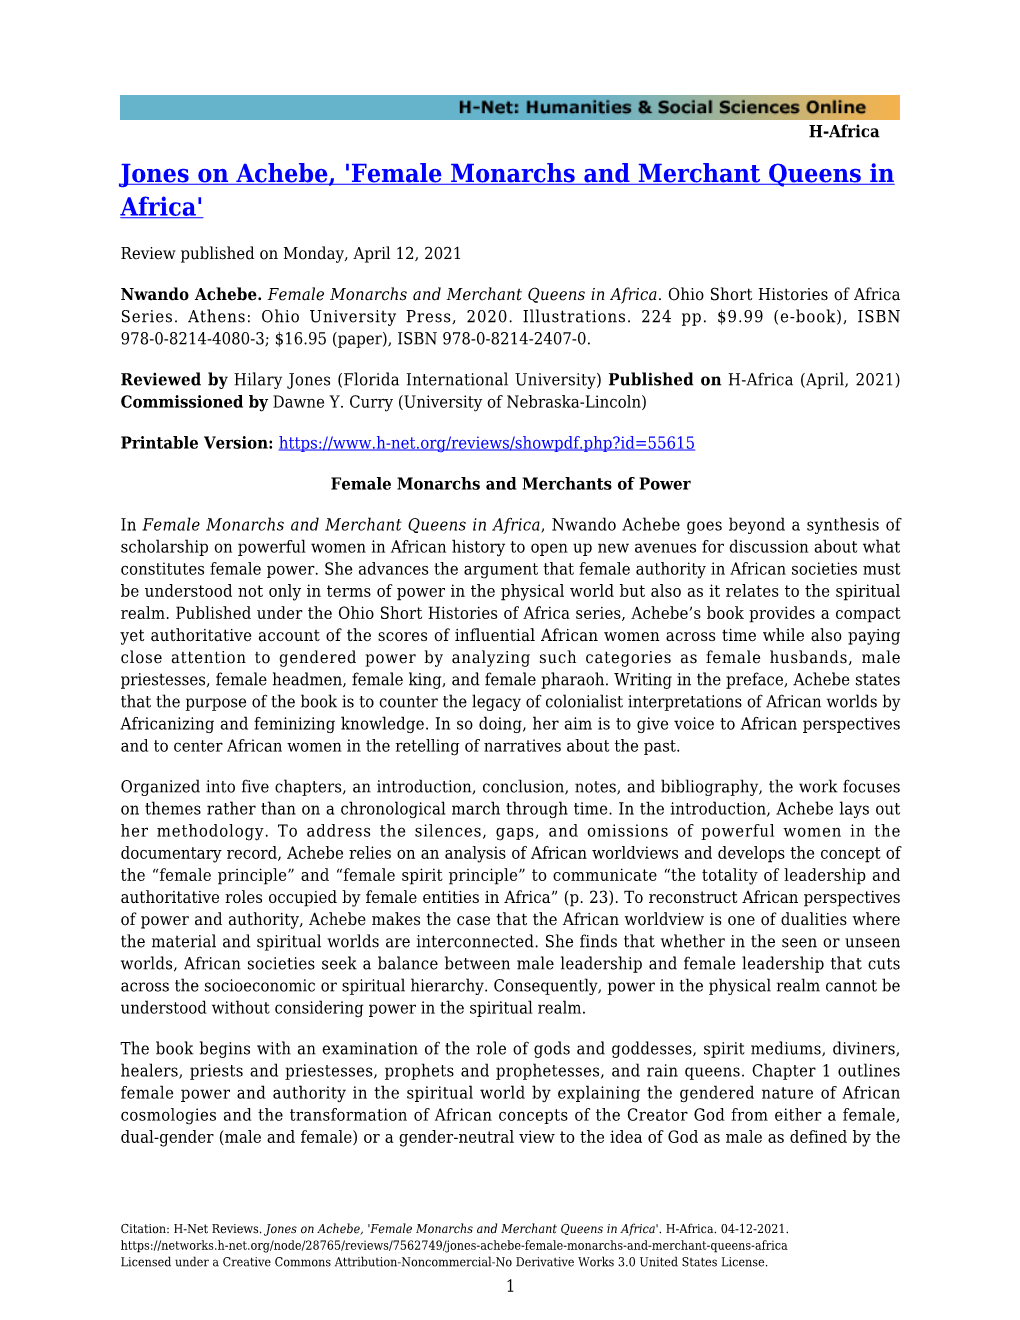 Female Monarchs and Merchant Queens in Africa'